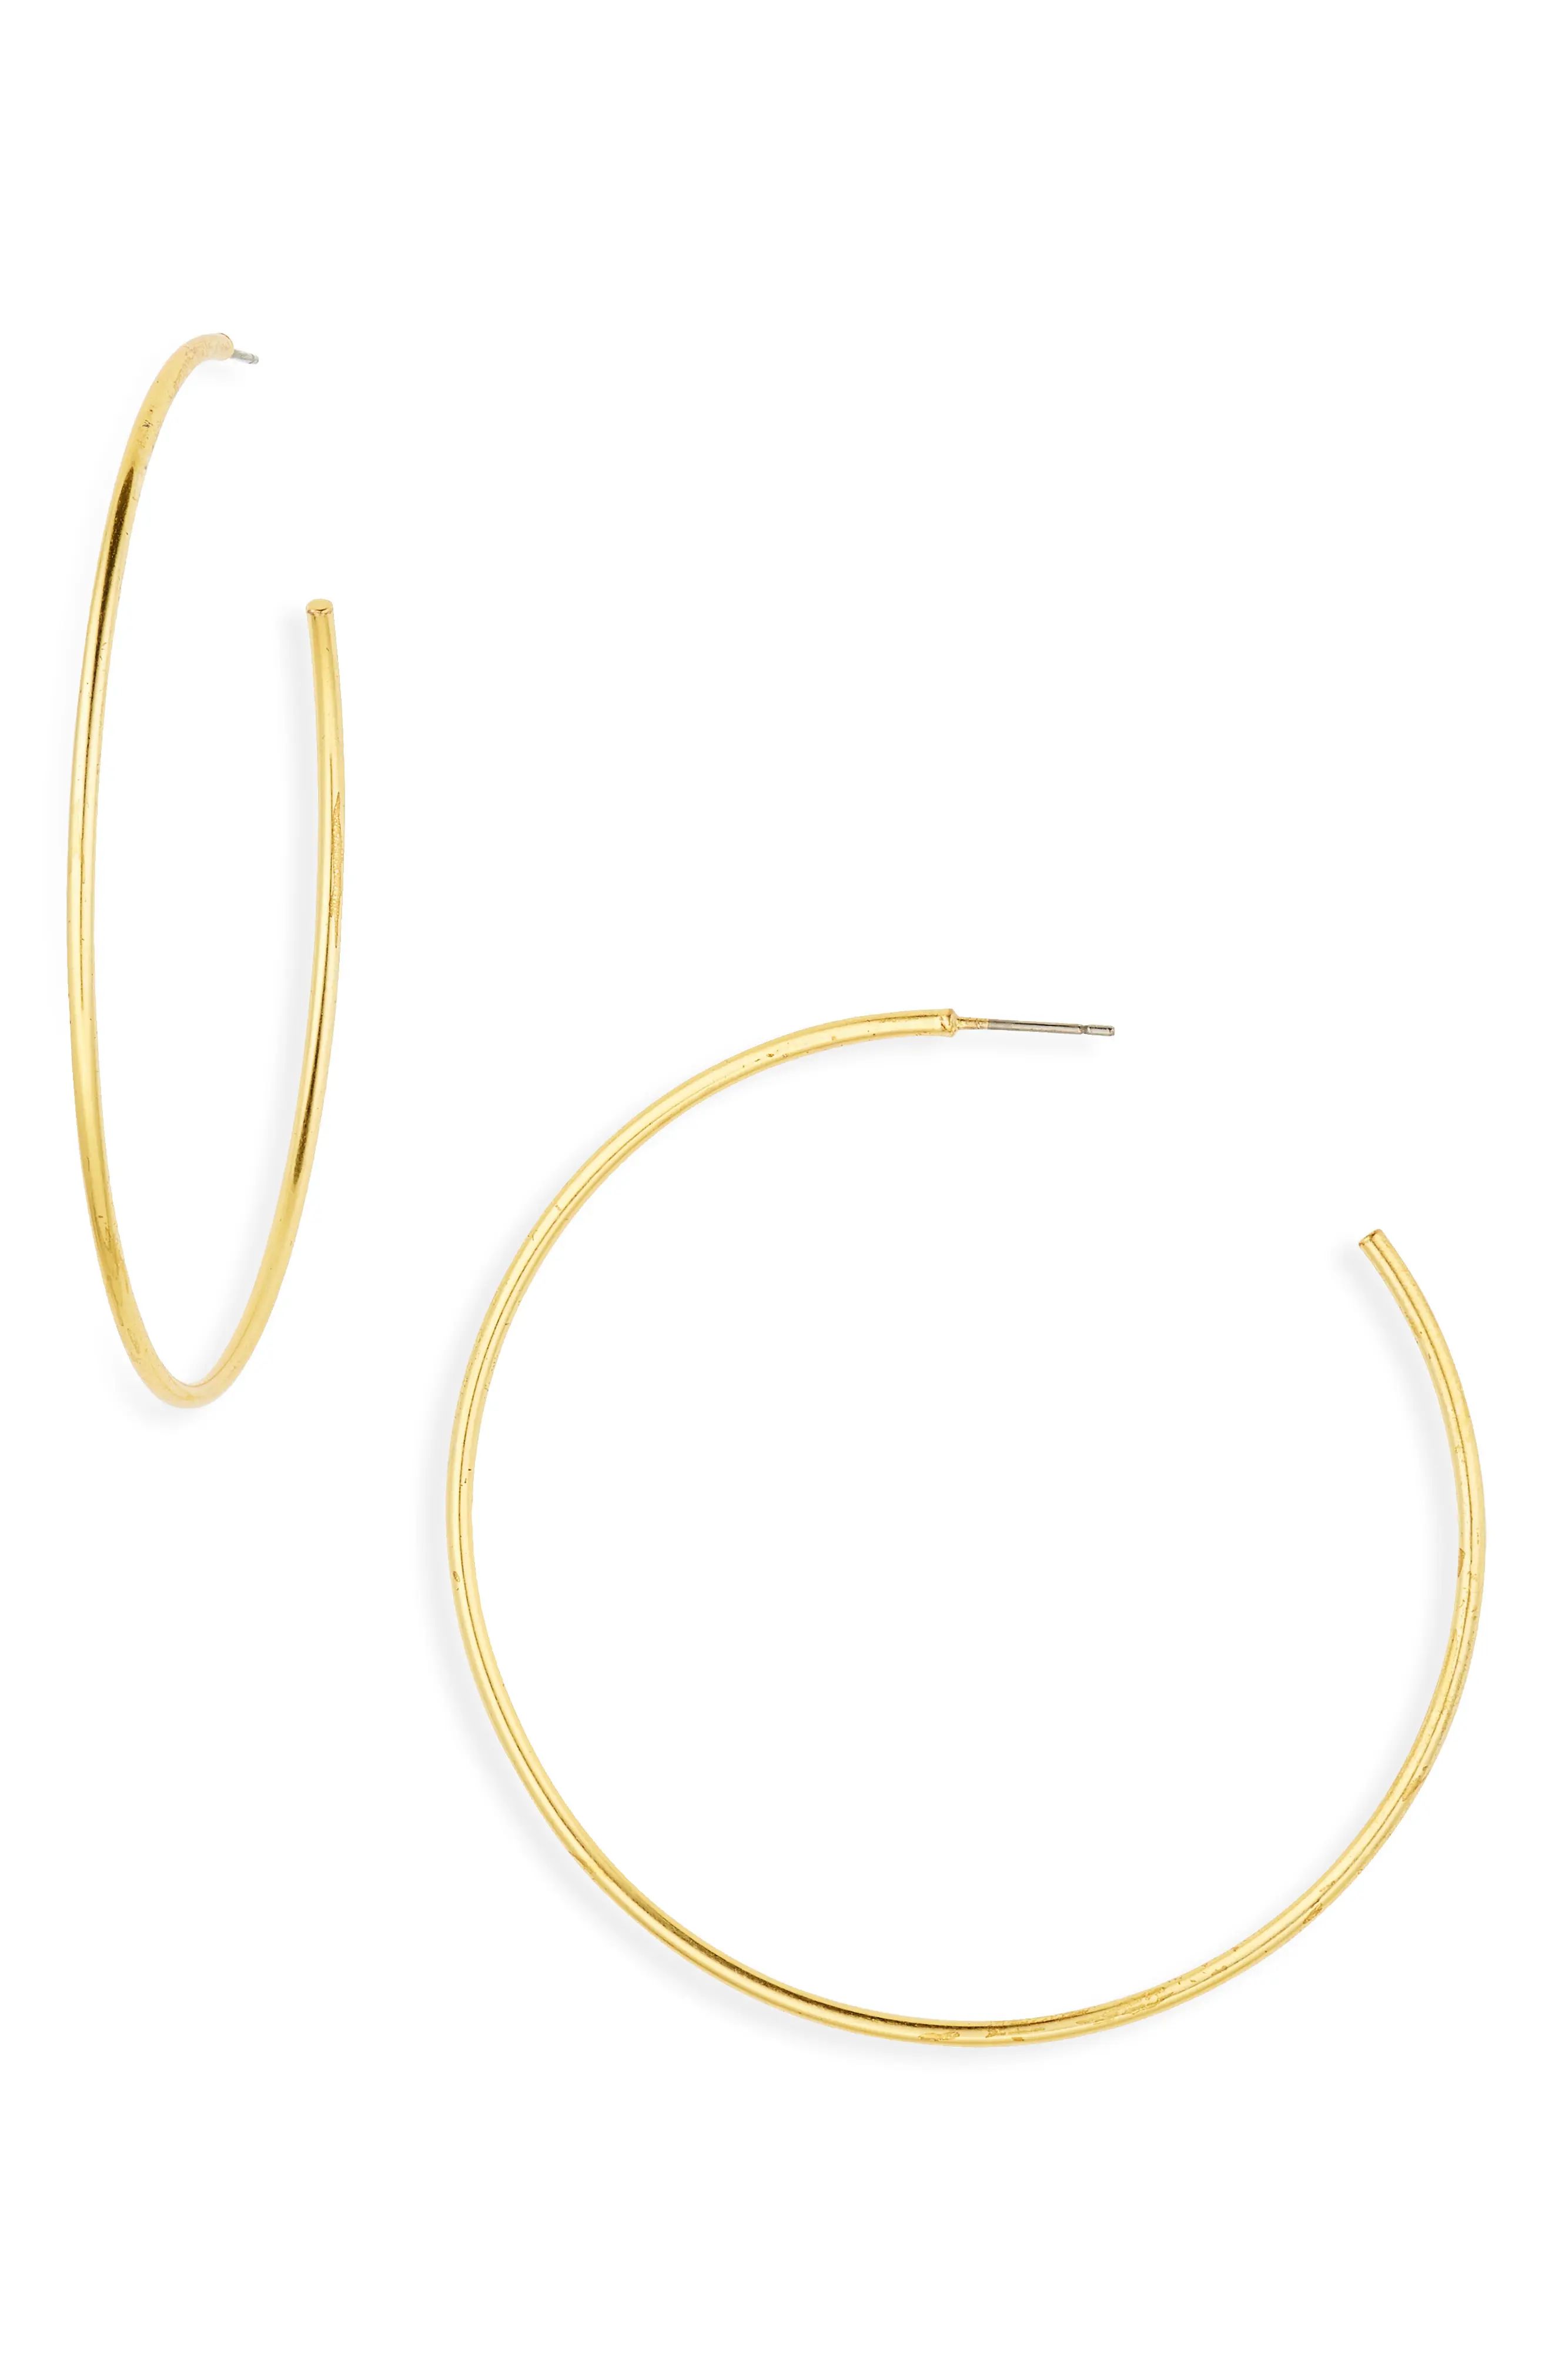 Madewell Oversize Hoop Earrings in Vintage Gold at Nordstrom | Nordstrom